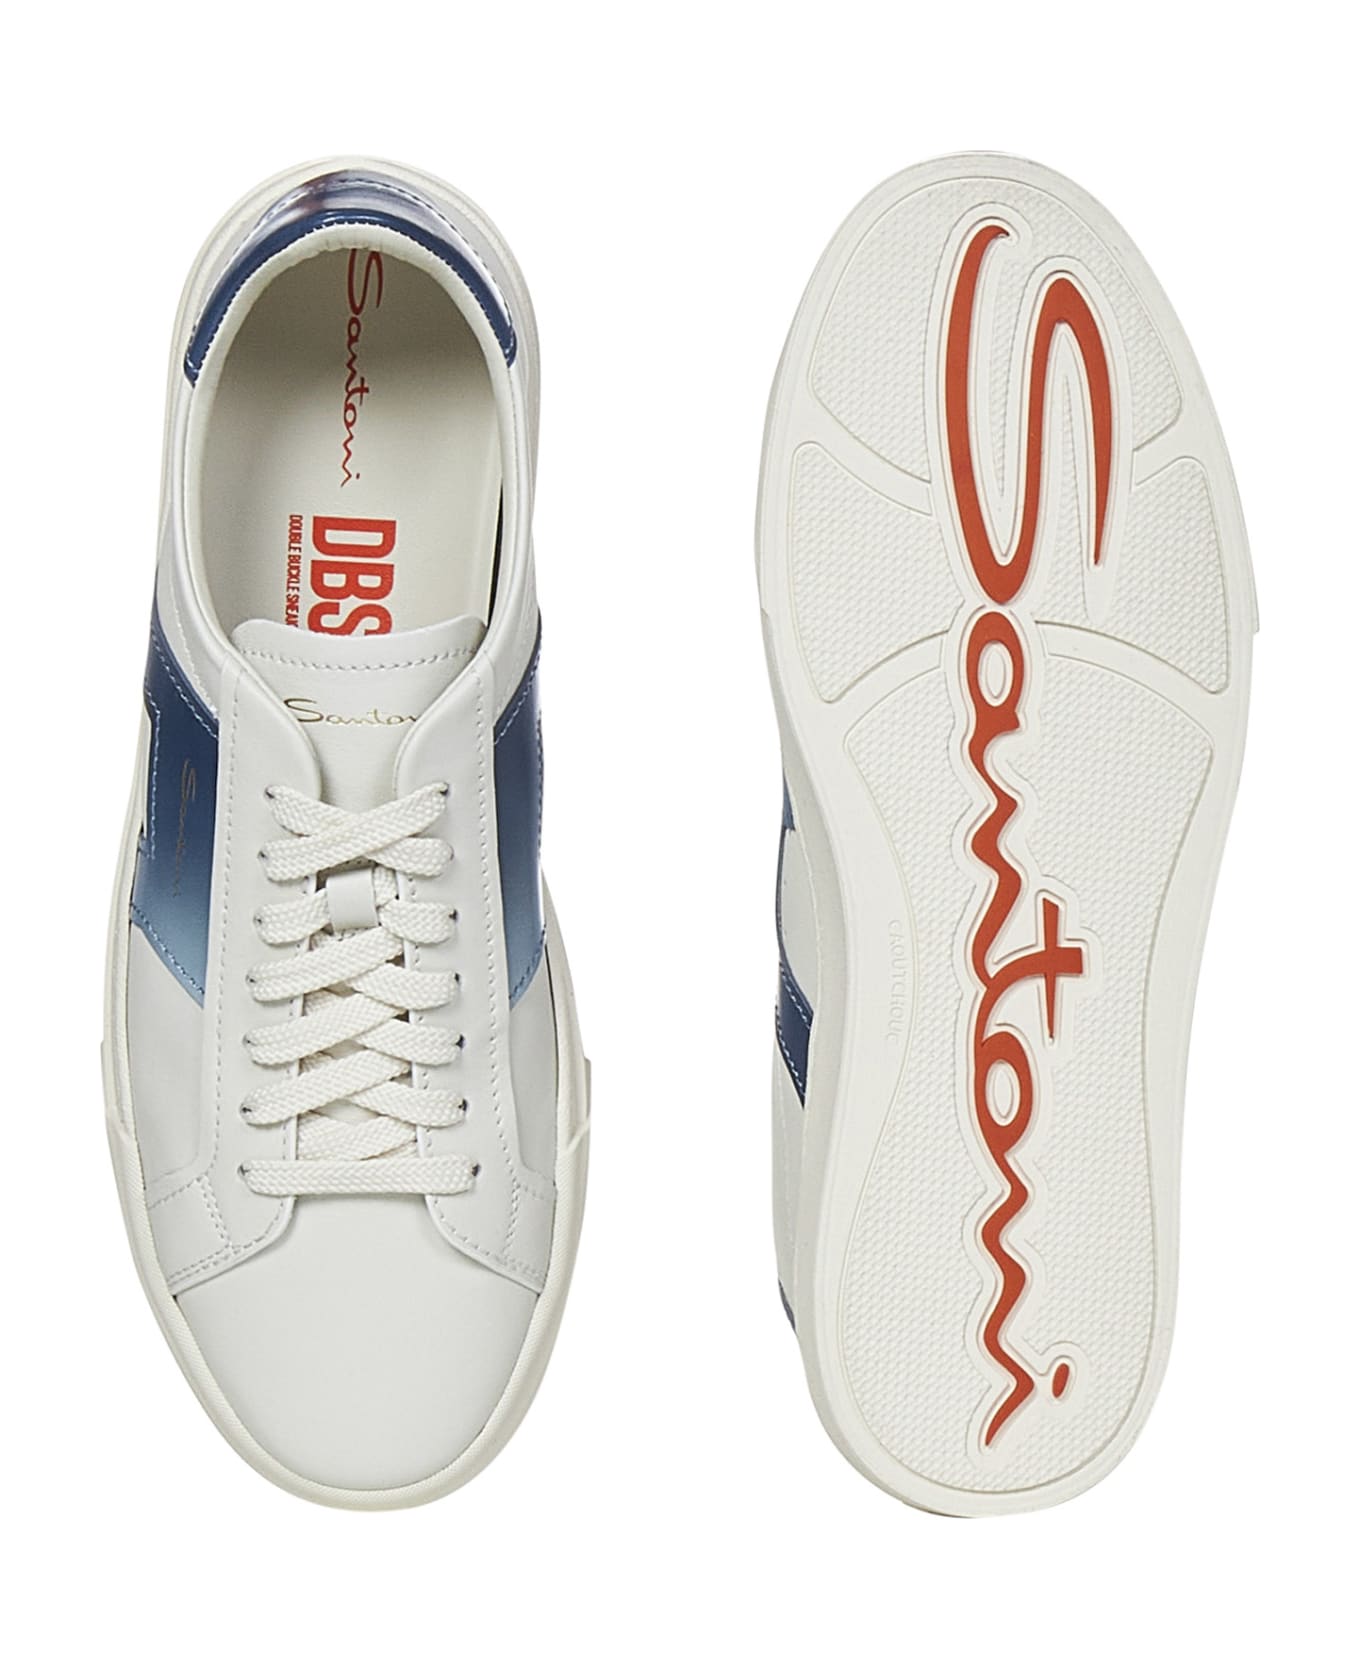 Santoni Double Buckle Sneakers - White